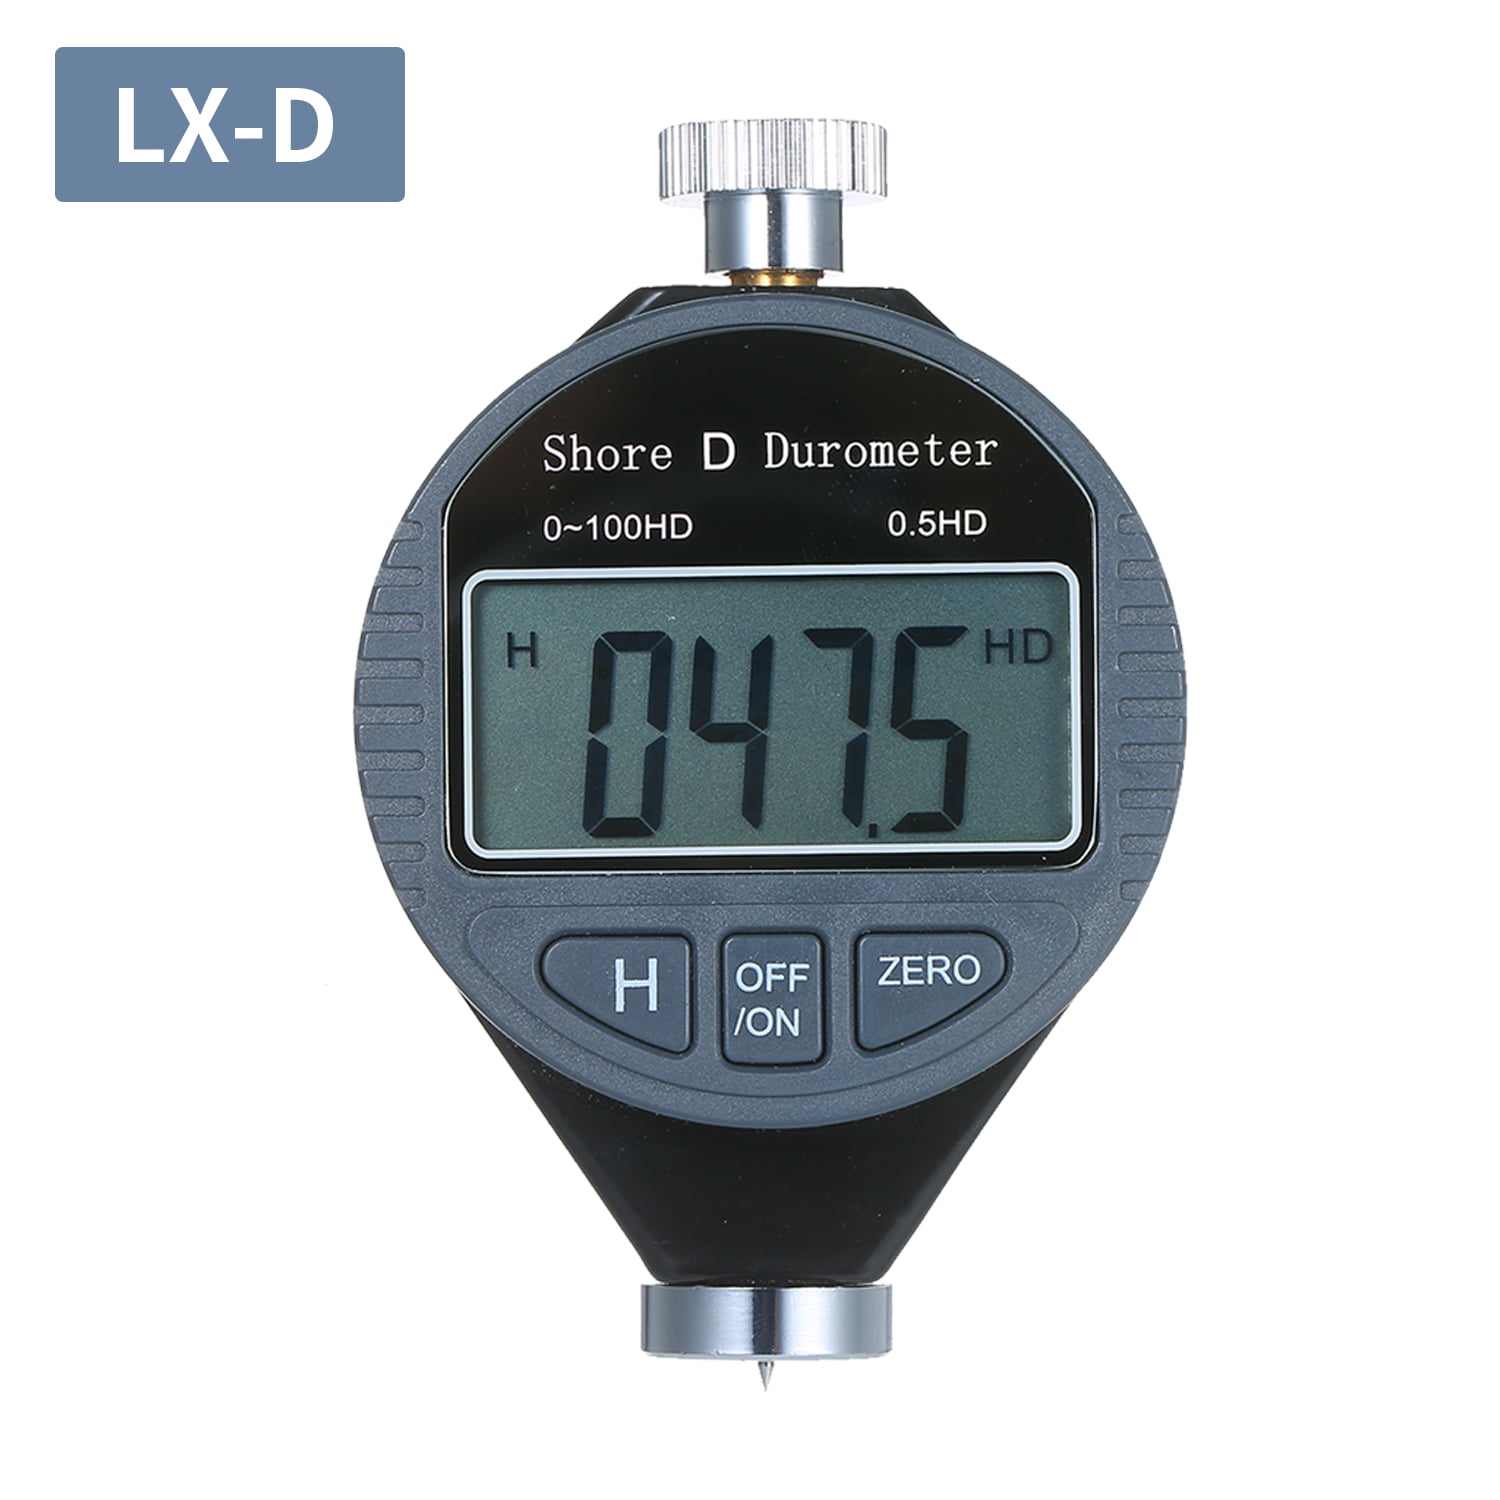 Hardness Testing Apparatus,Digital 100HD A Durometer Shore Rubber Hardness Tester LCD Display Meter Hardness Tester 